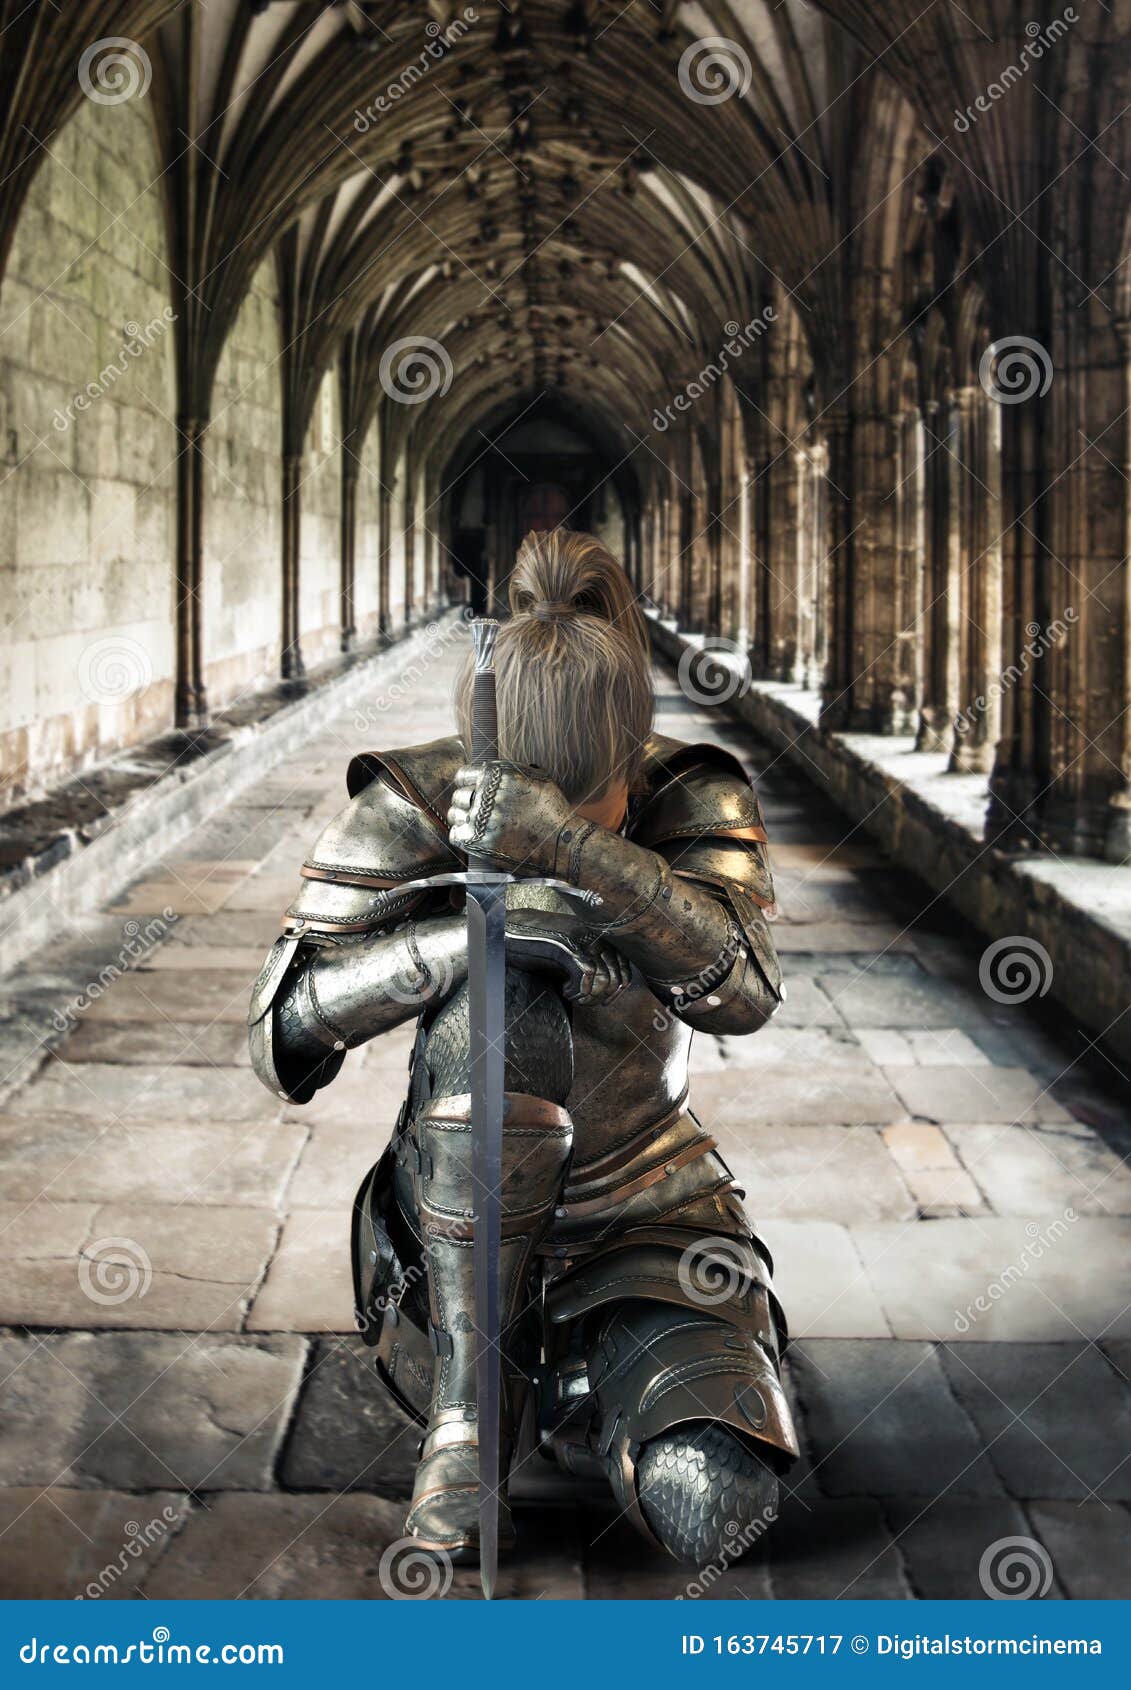 Female Warrior Knight Kneeling Proudly Wearing Decorative Metal Armor